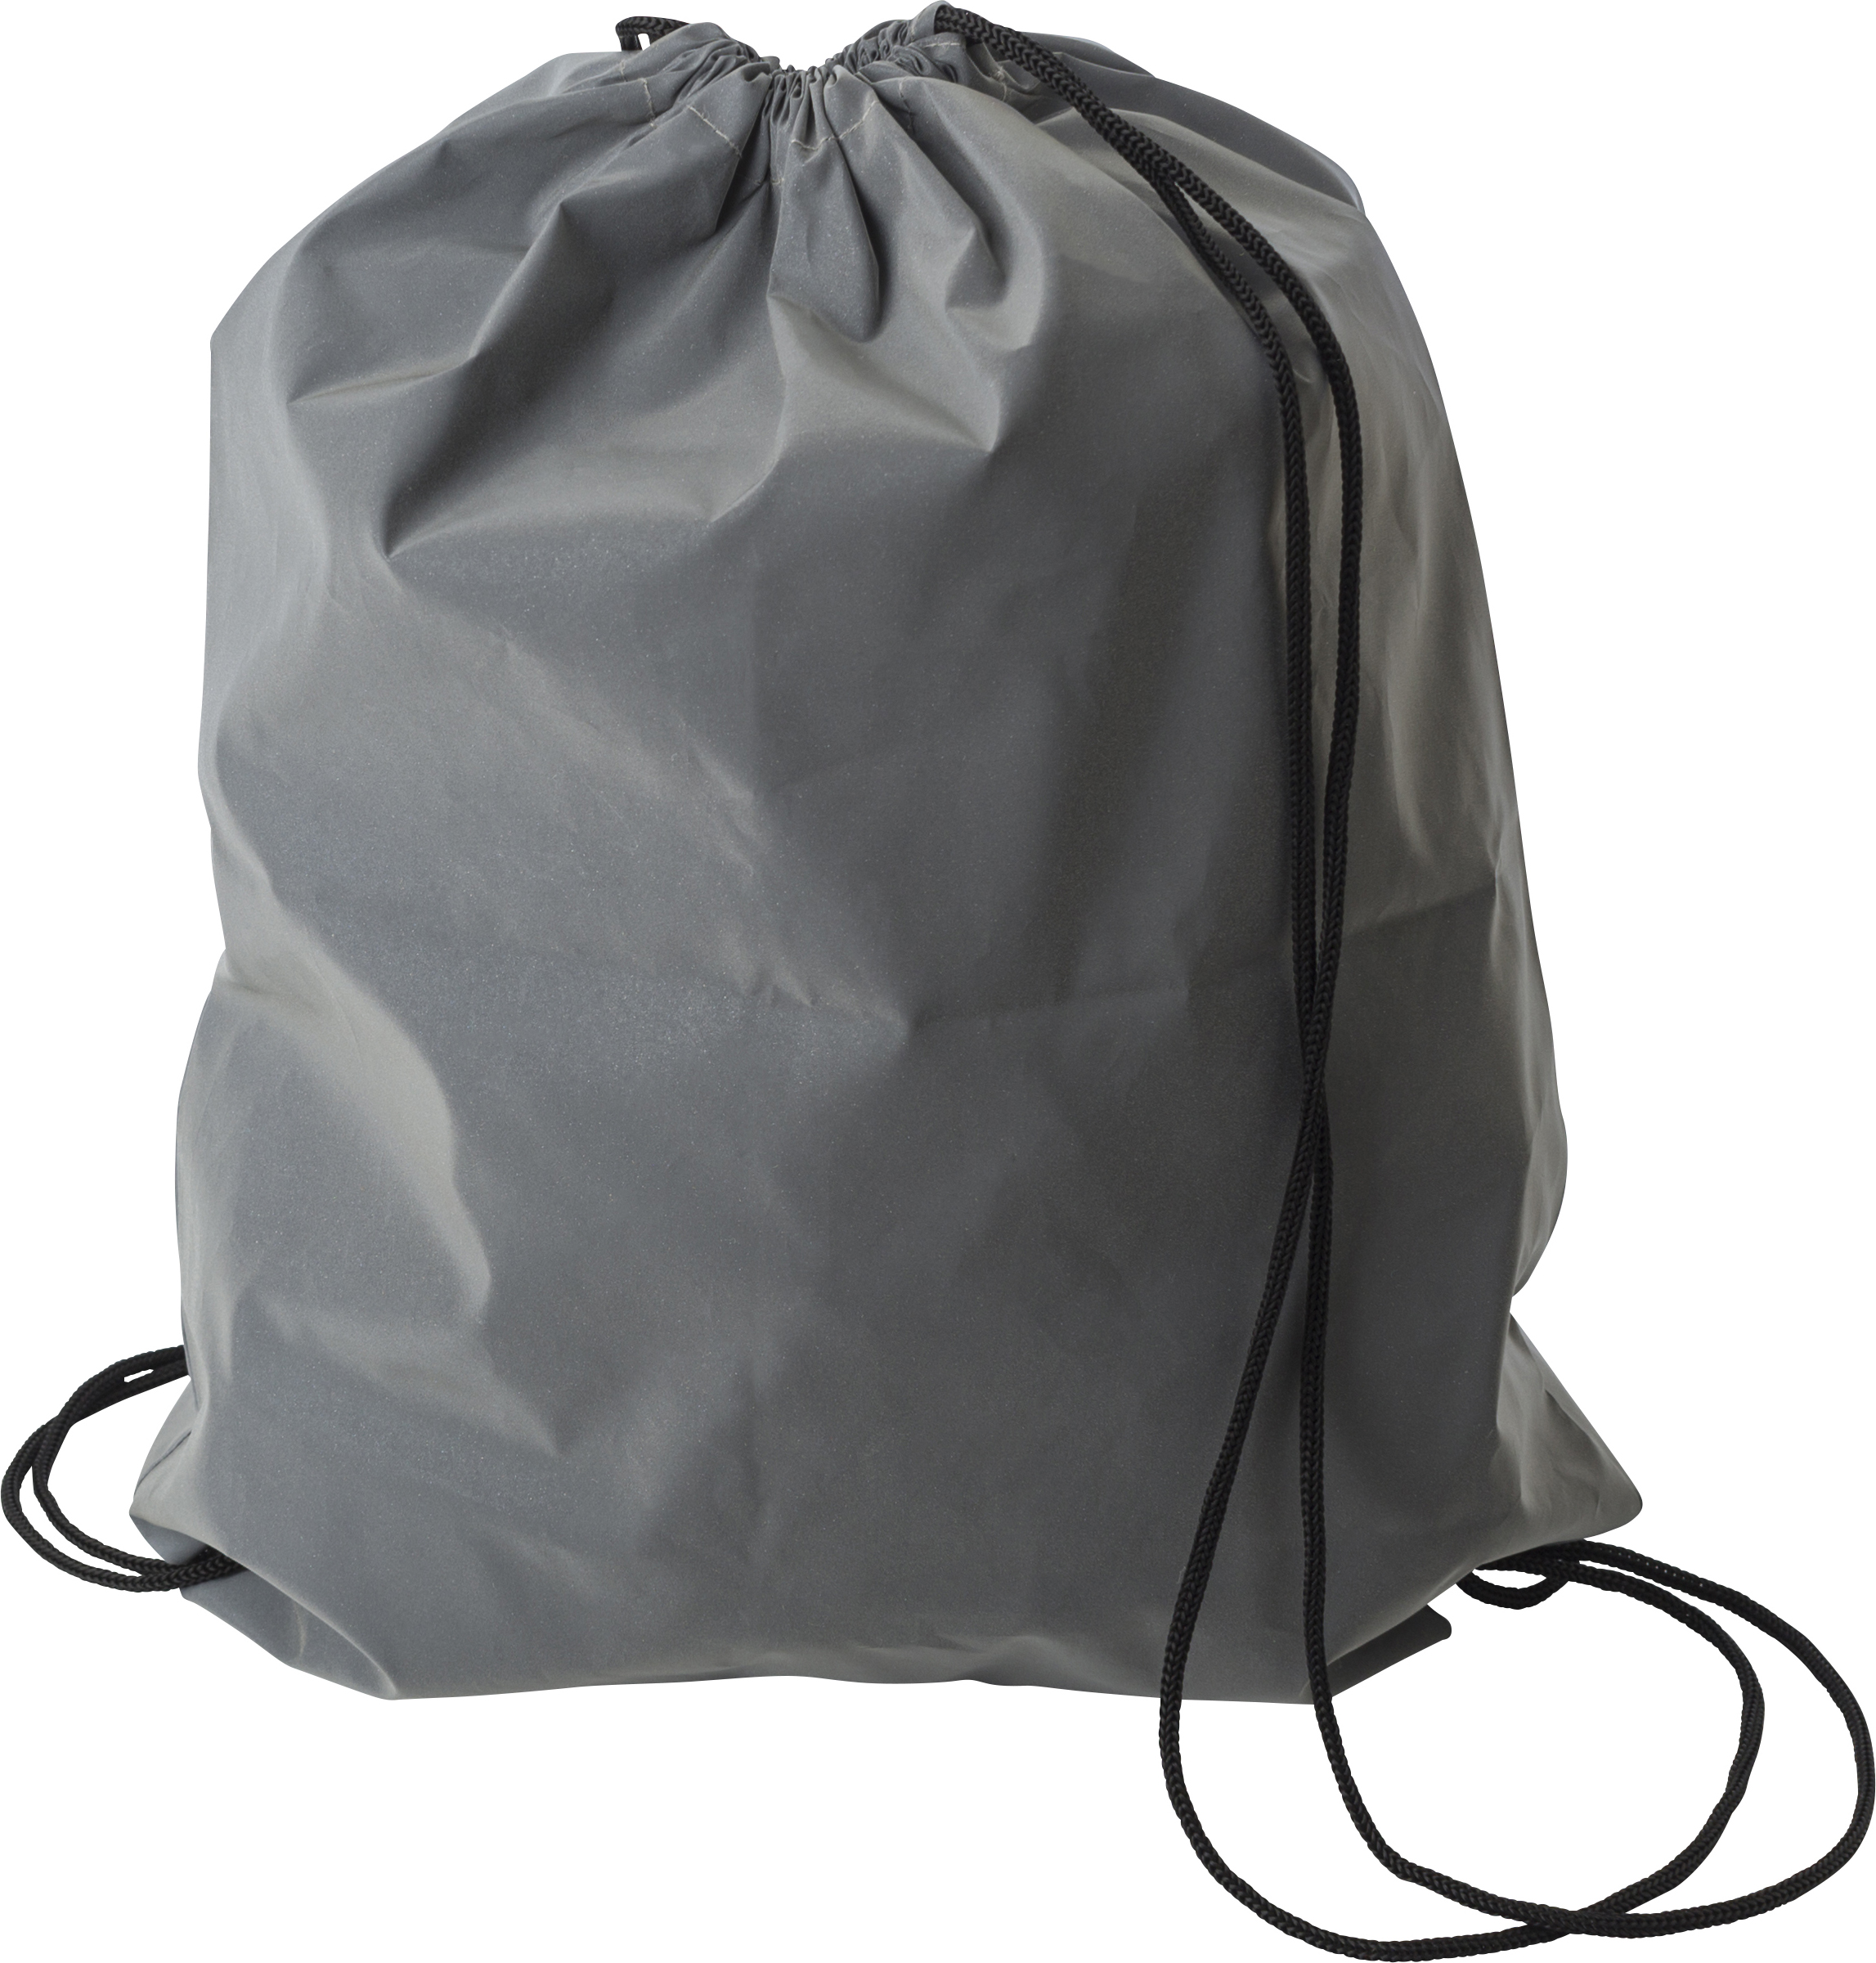 432545 003999999 3d090 frt pro01 fal - Synthetic fibre (190D) reflective drawstring backpack